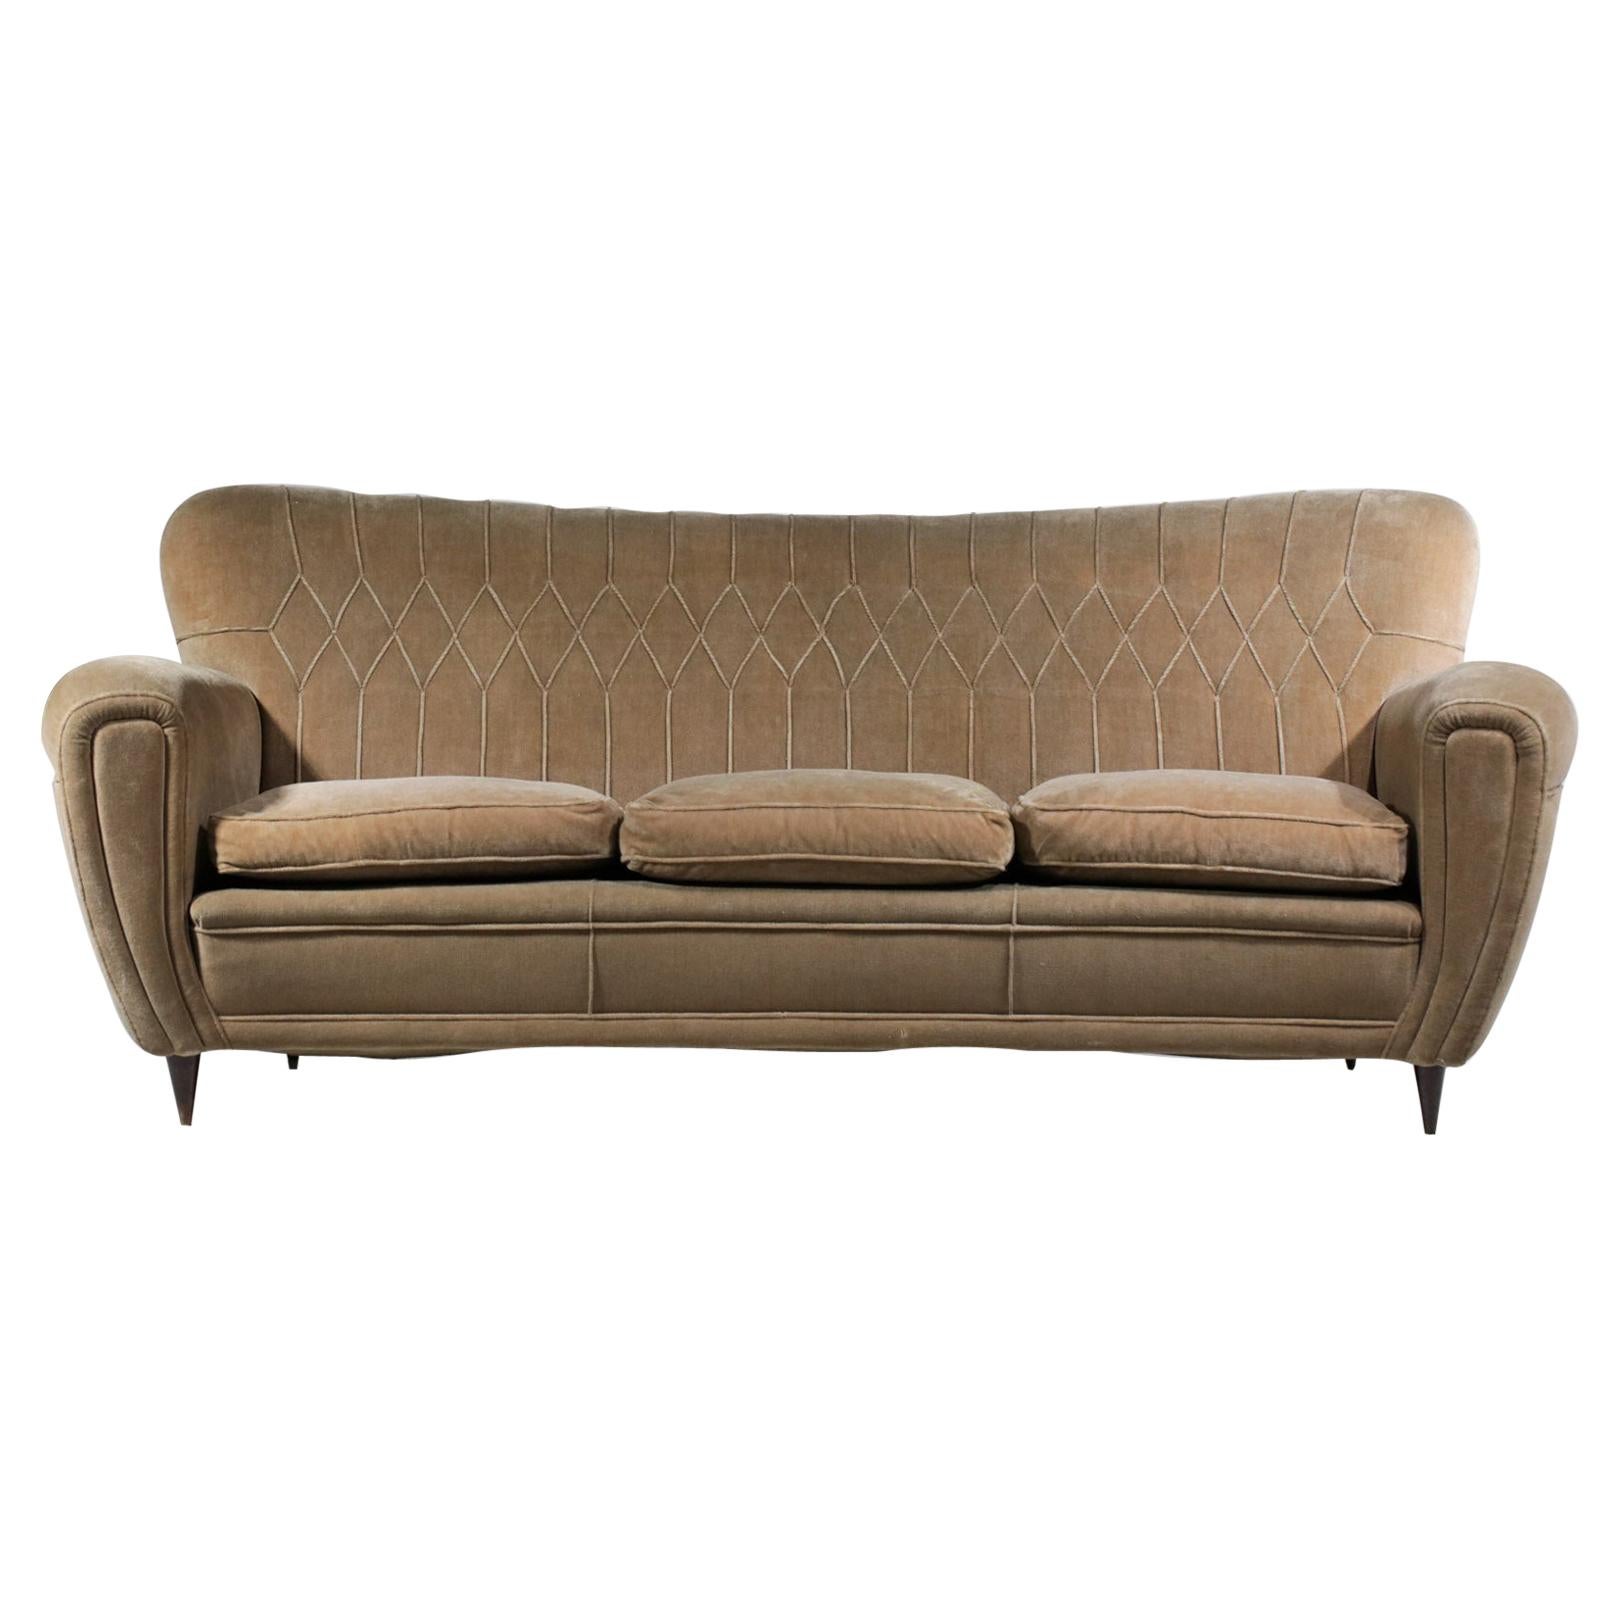 Italian Sofa in the style of Gio Ponti Design